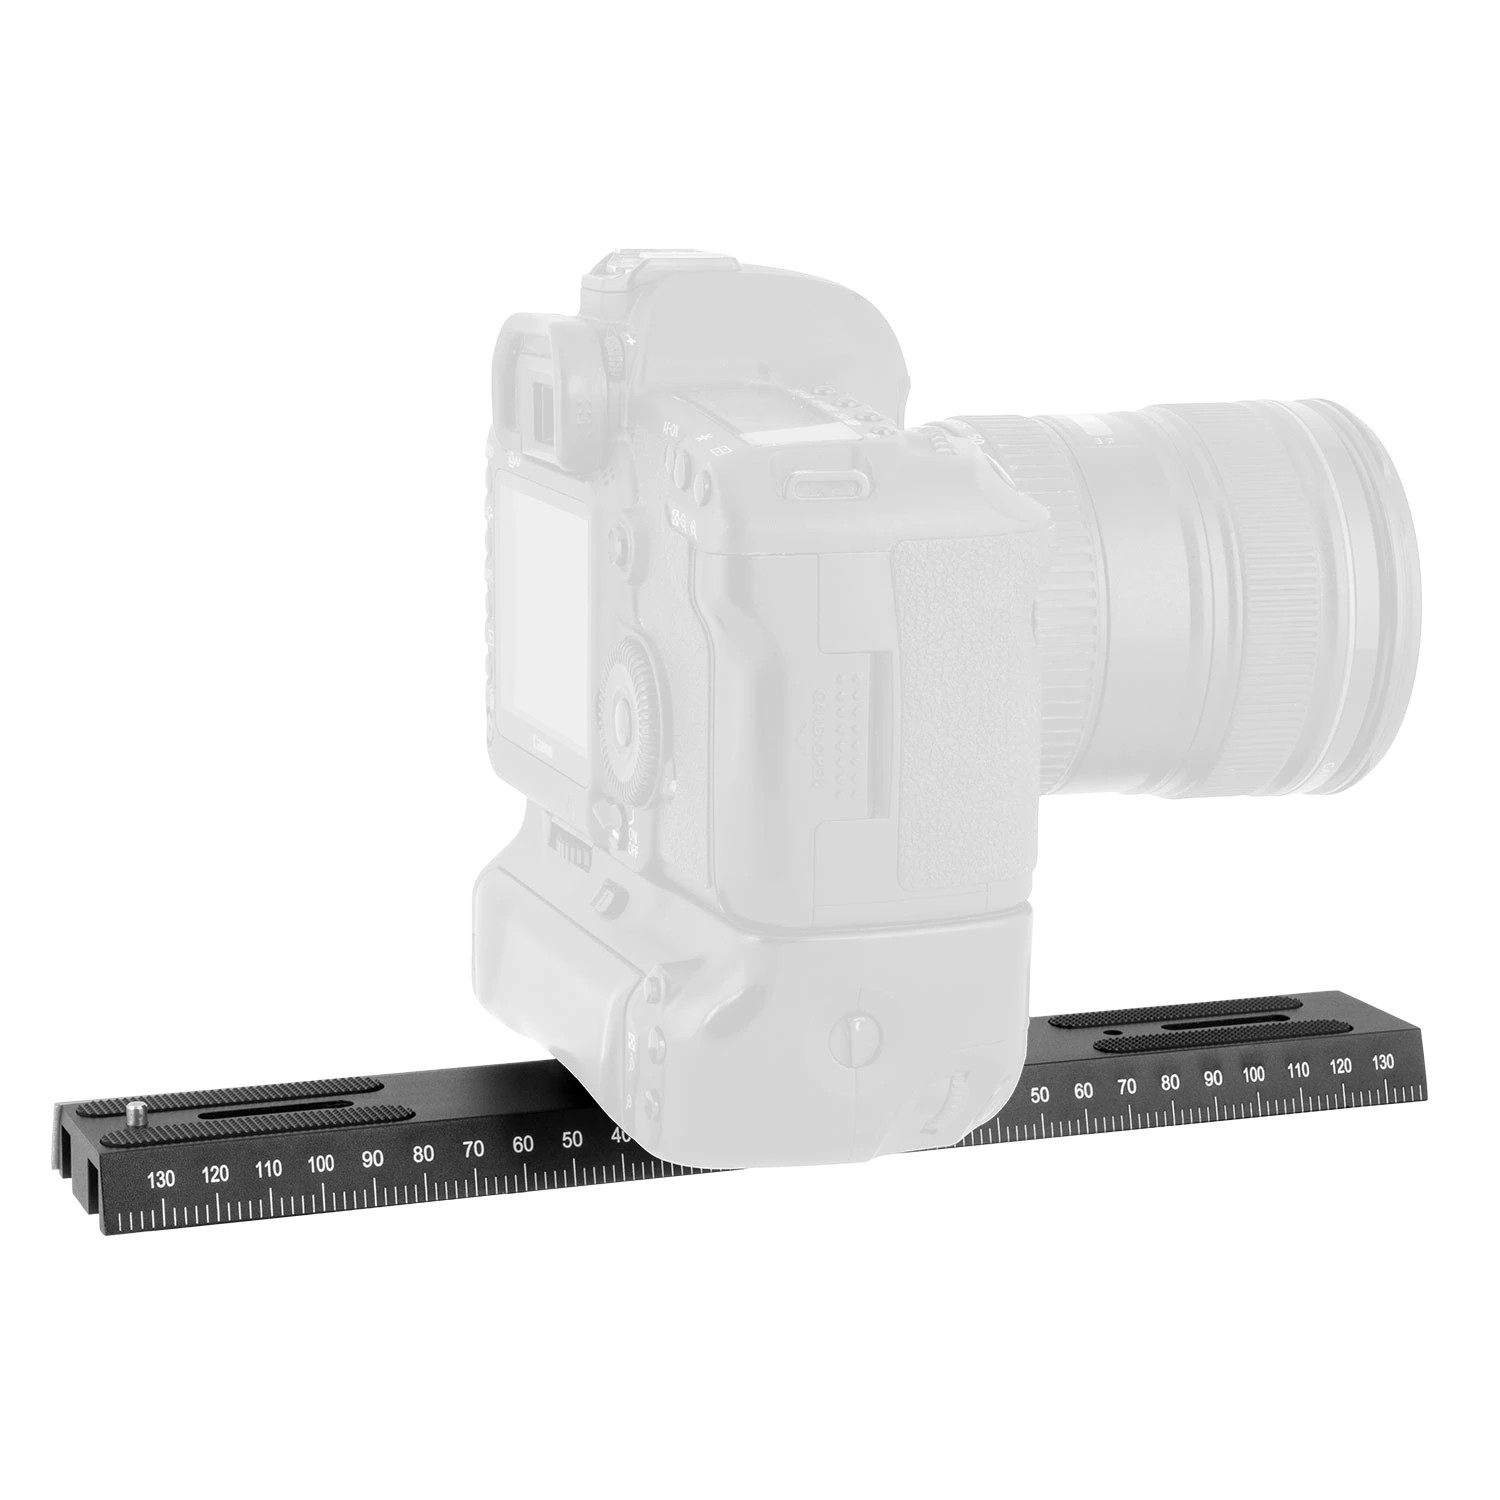 EXPLORE SCIENTIFIC Camera Dovetail Kit for iEXOS-100 Mount